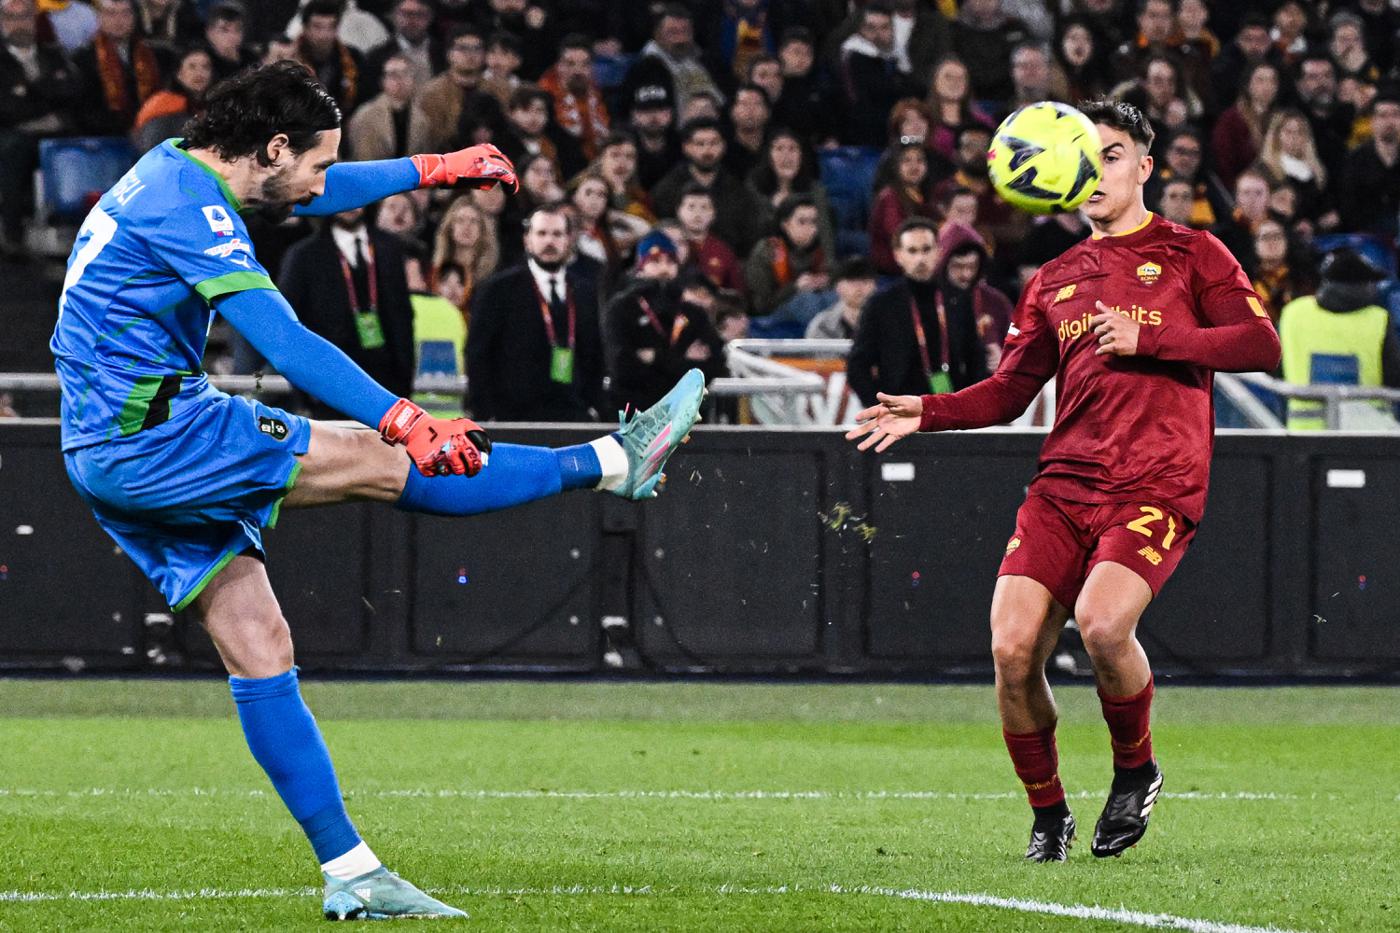 Roma - Sassuolo - 3:4. Italian Championship, 26th round. Match review, statistics.